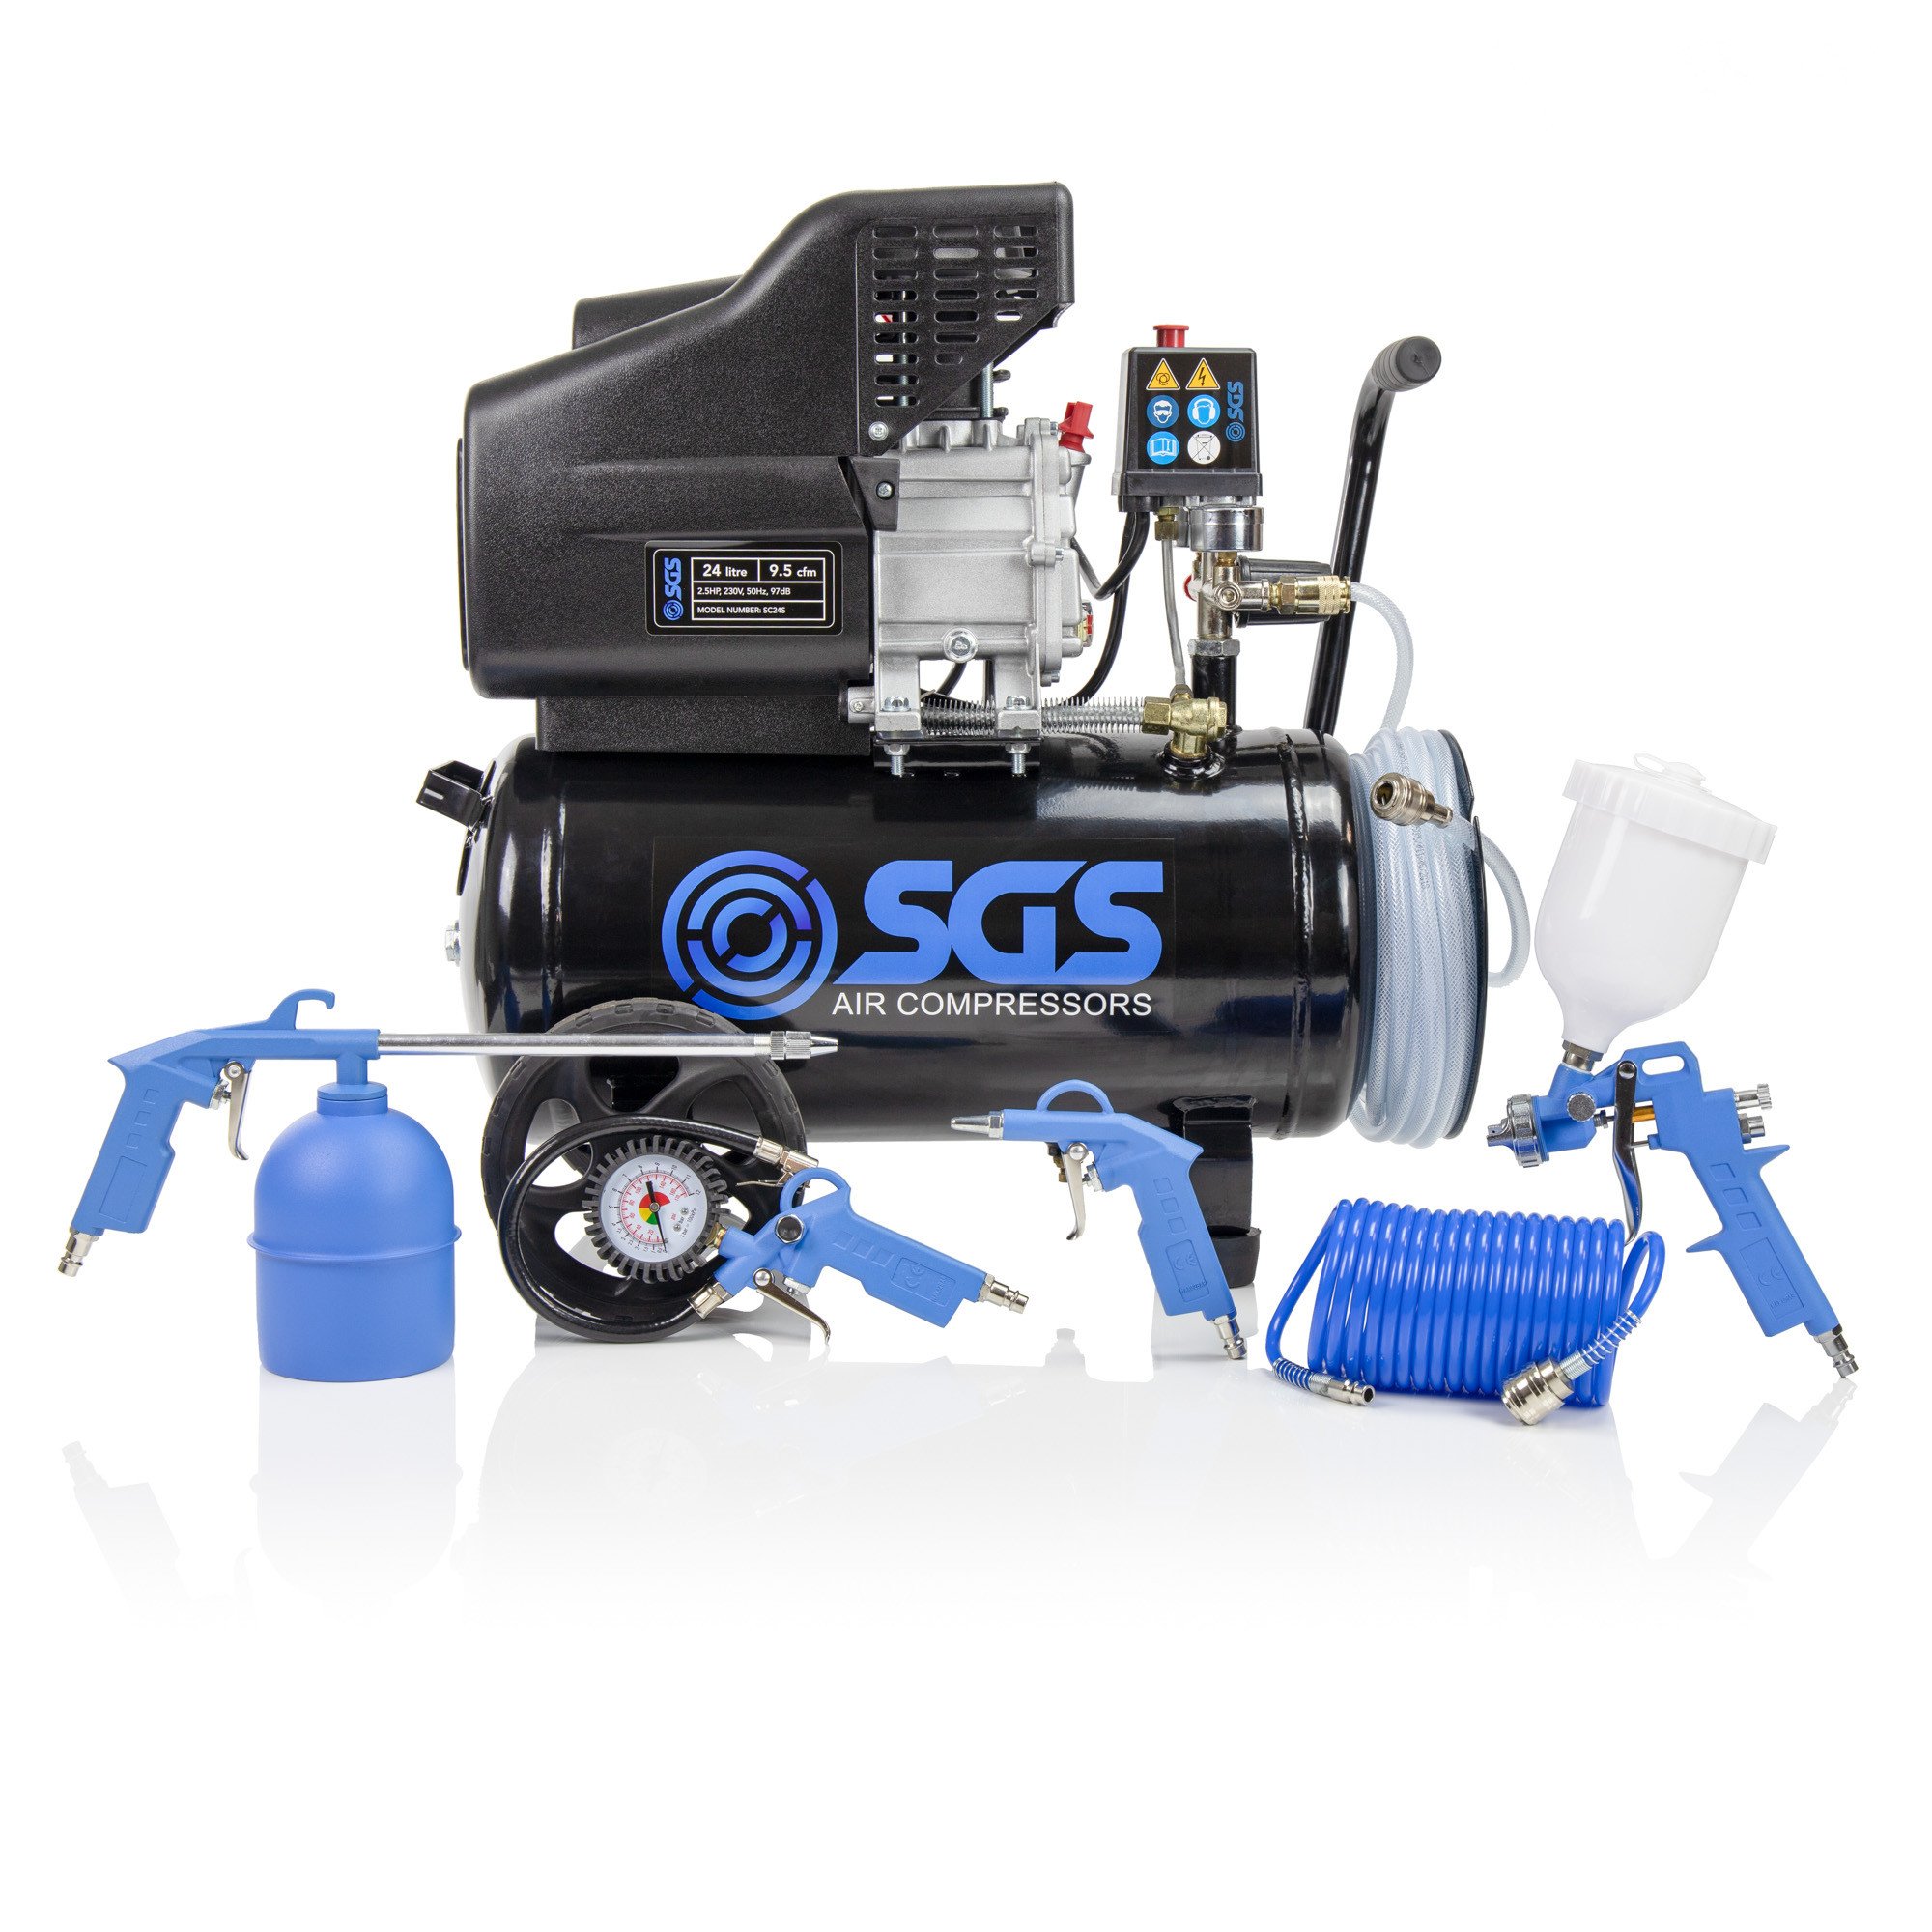 SGS 24升直接驱动空气压缩机，集成软管卷盘和5件工具包- 9.5CFM 2.5HP 24L